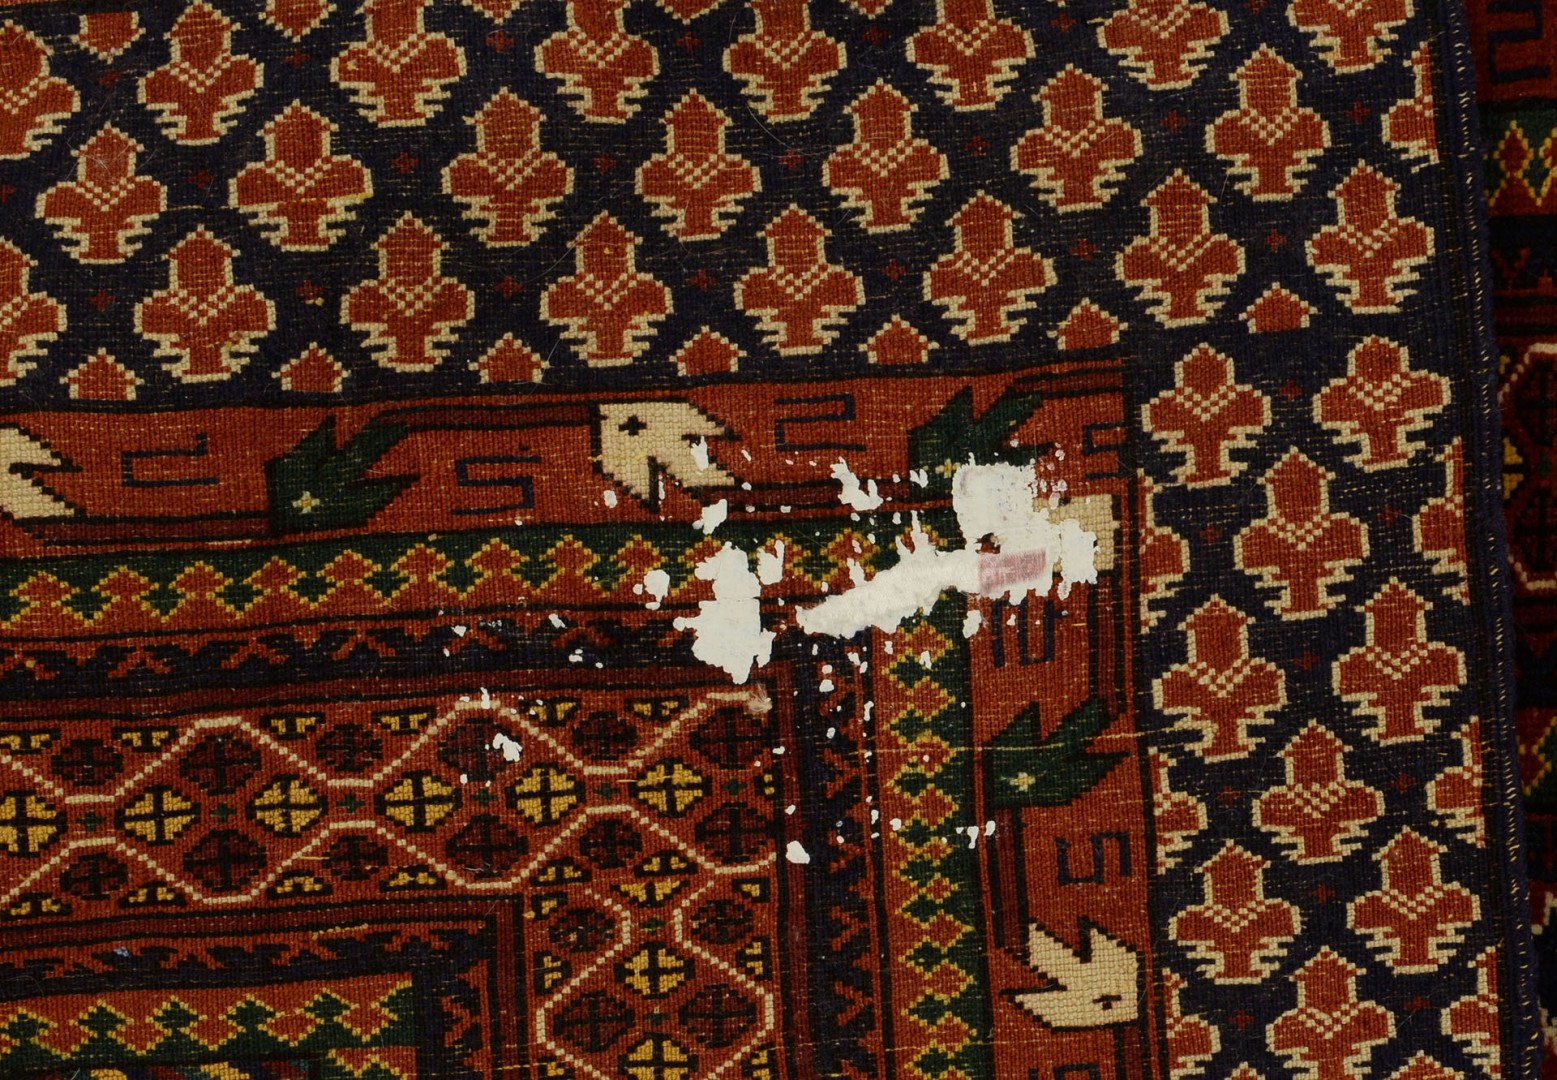 Lot 662: Turkoman Prayer Rug, 5.6 x 3.5